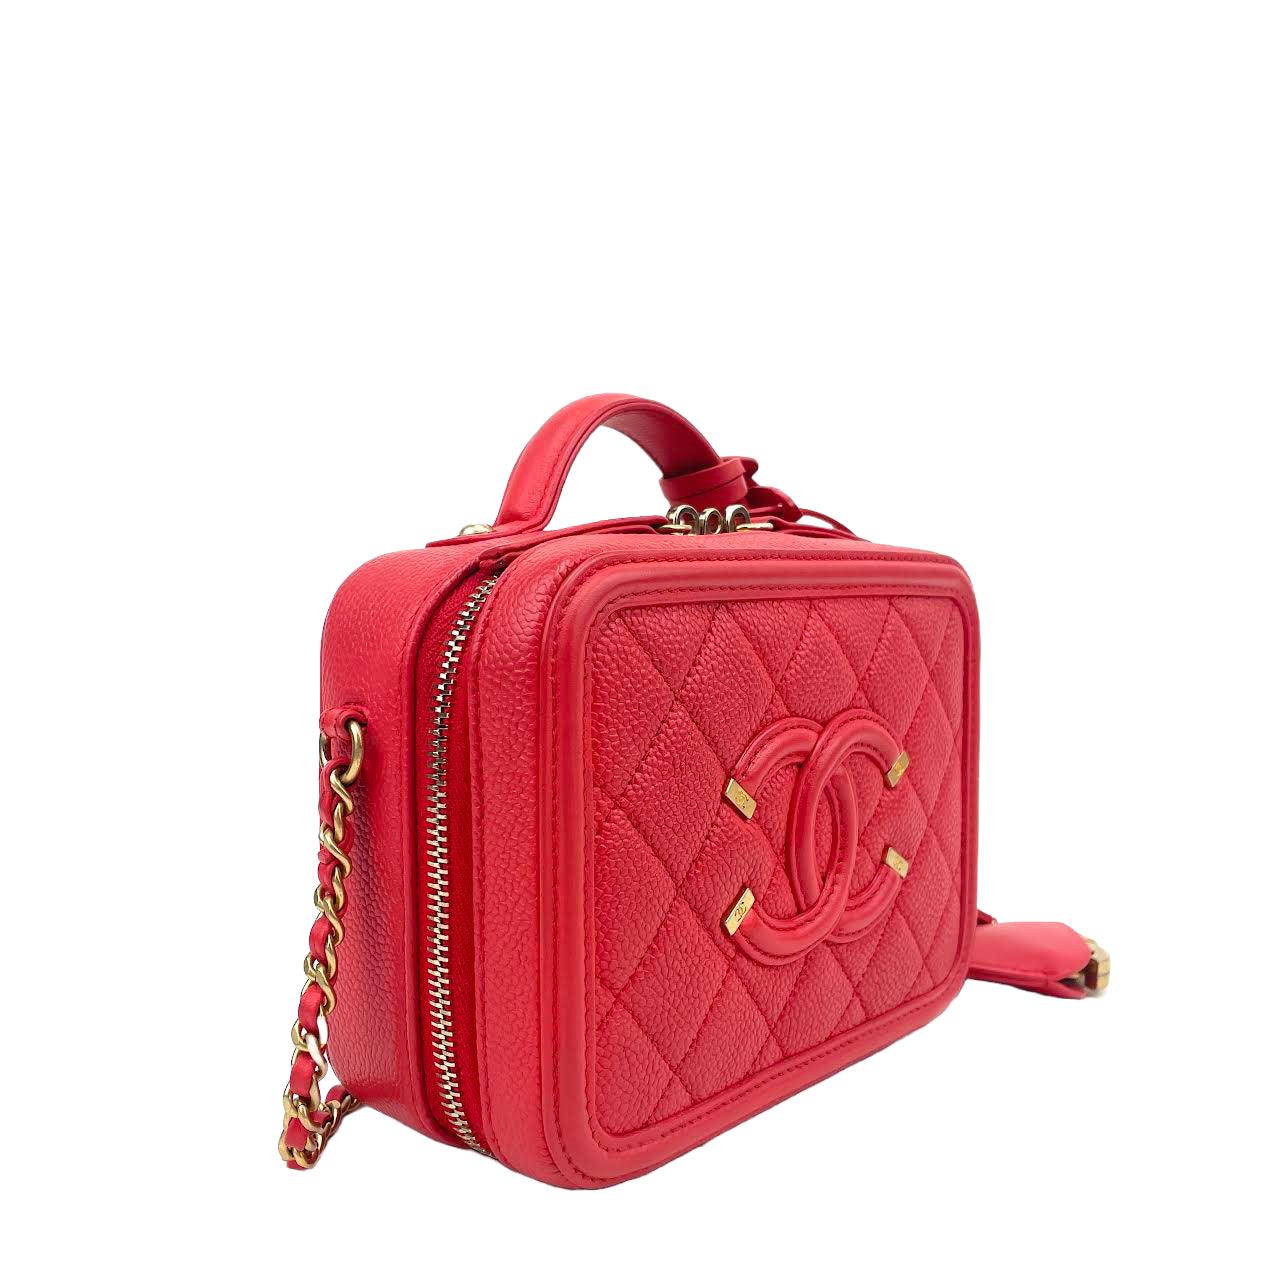 New Chanel vanity box bag pink